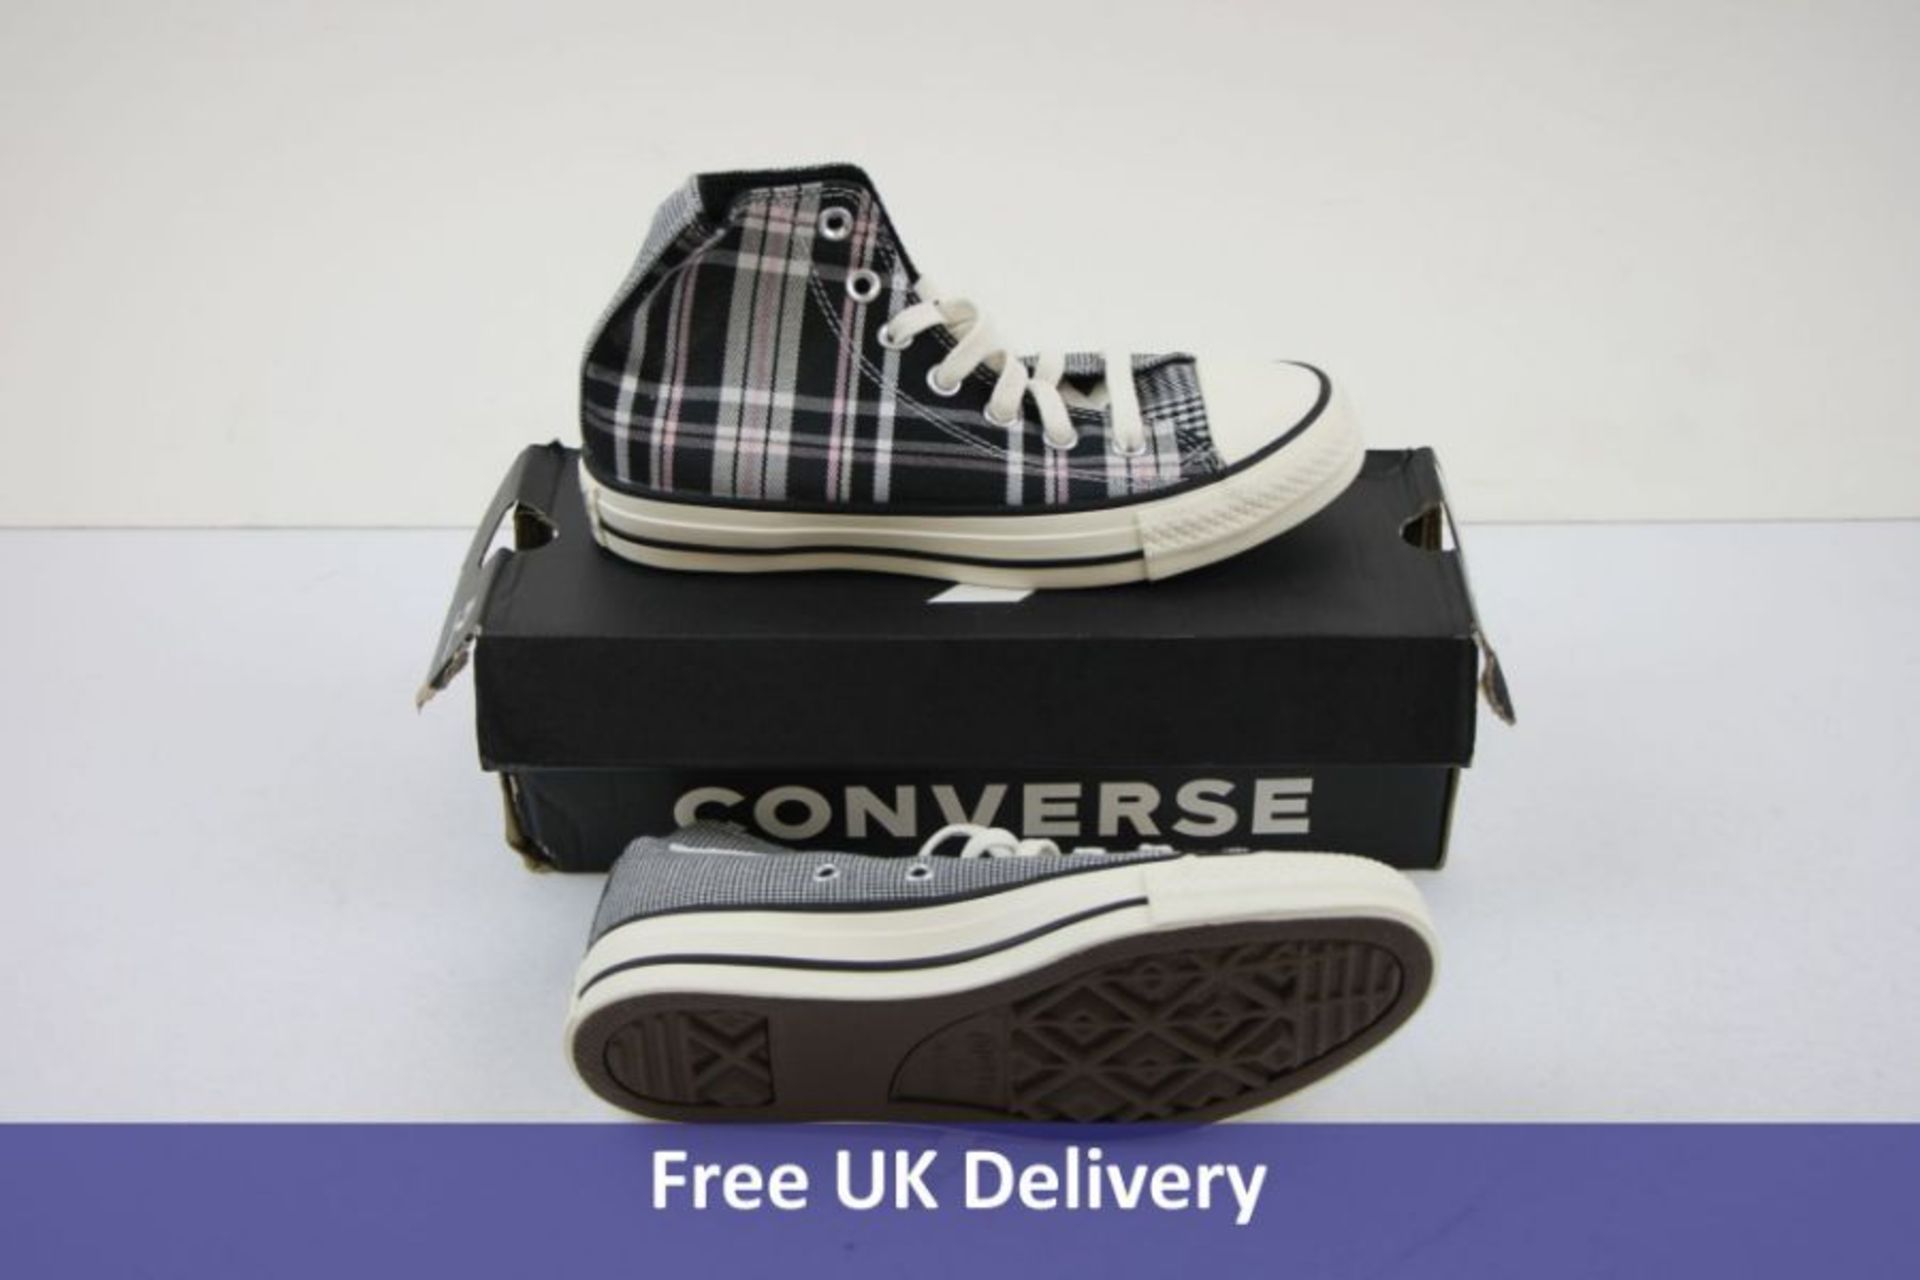 Converse Women's Ctas Hi Fabric Trainers, Black and White, UK 4